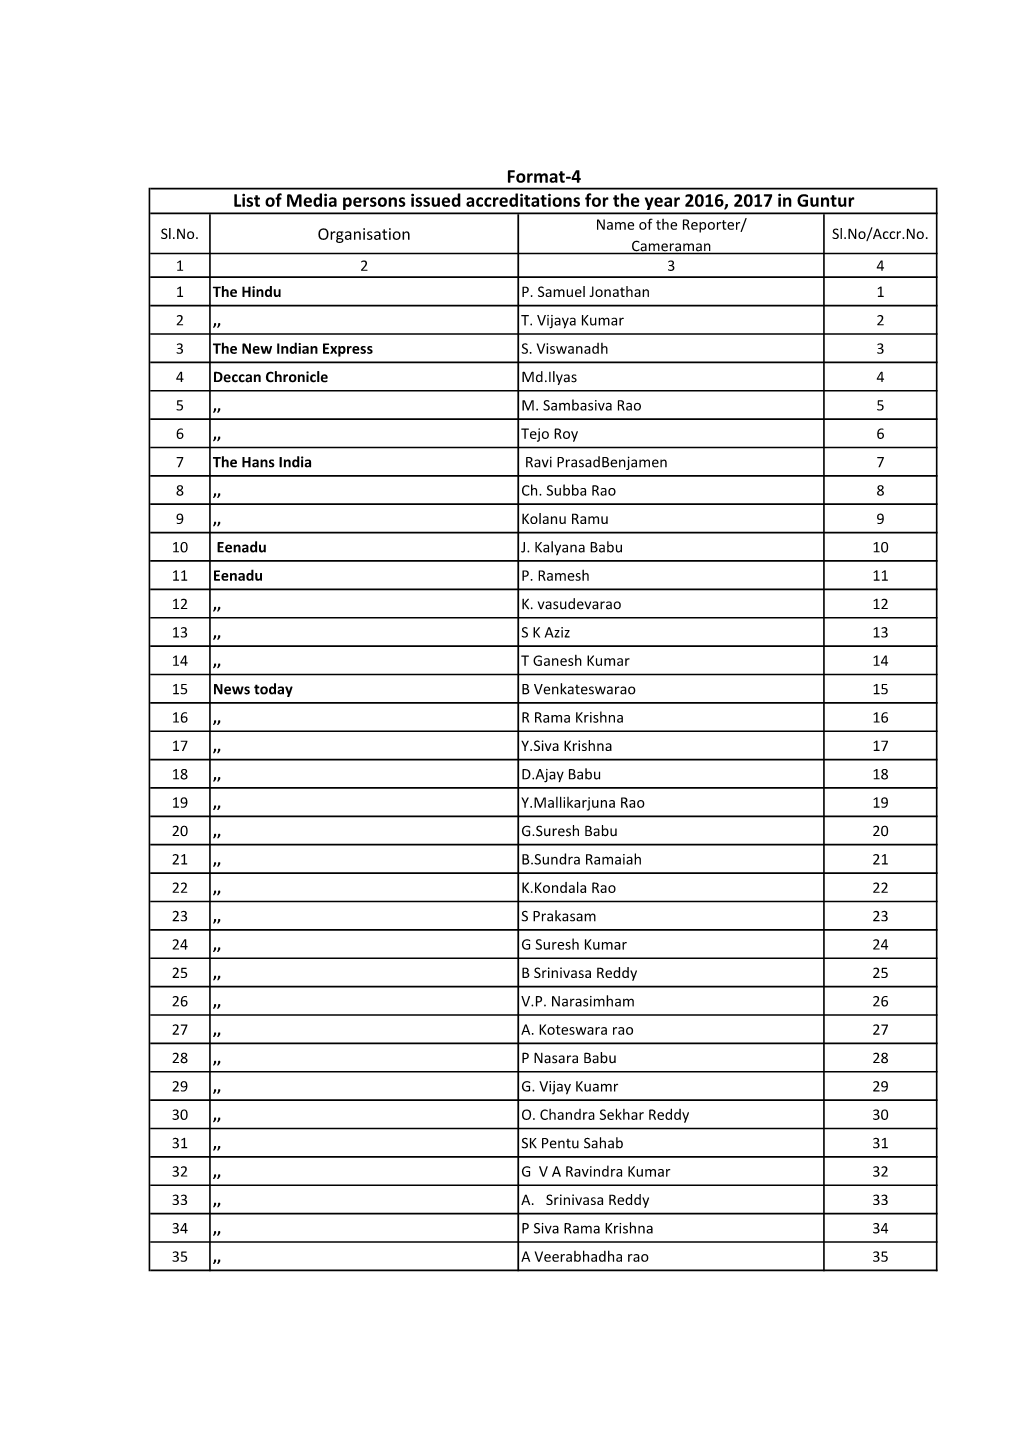 List-Of-Accreditation-Of-Guntur-District